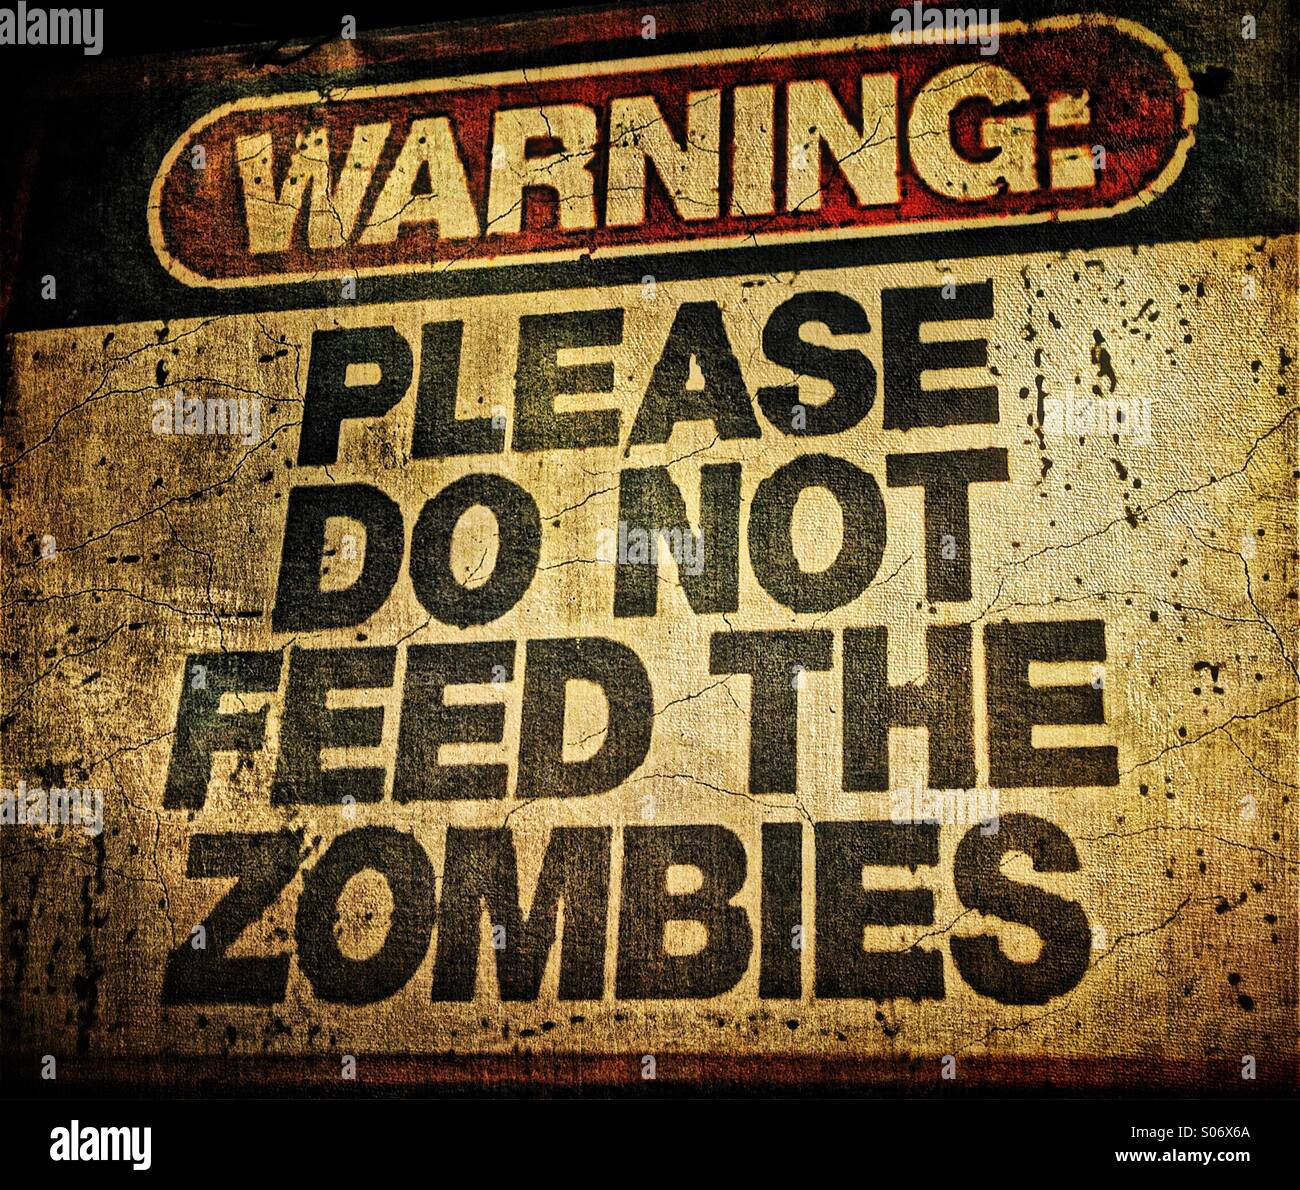 Zombie Stock Sign - Alamy Warning Photo